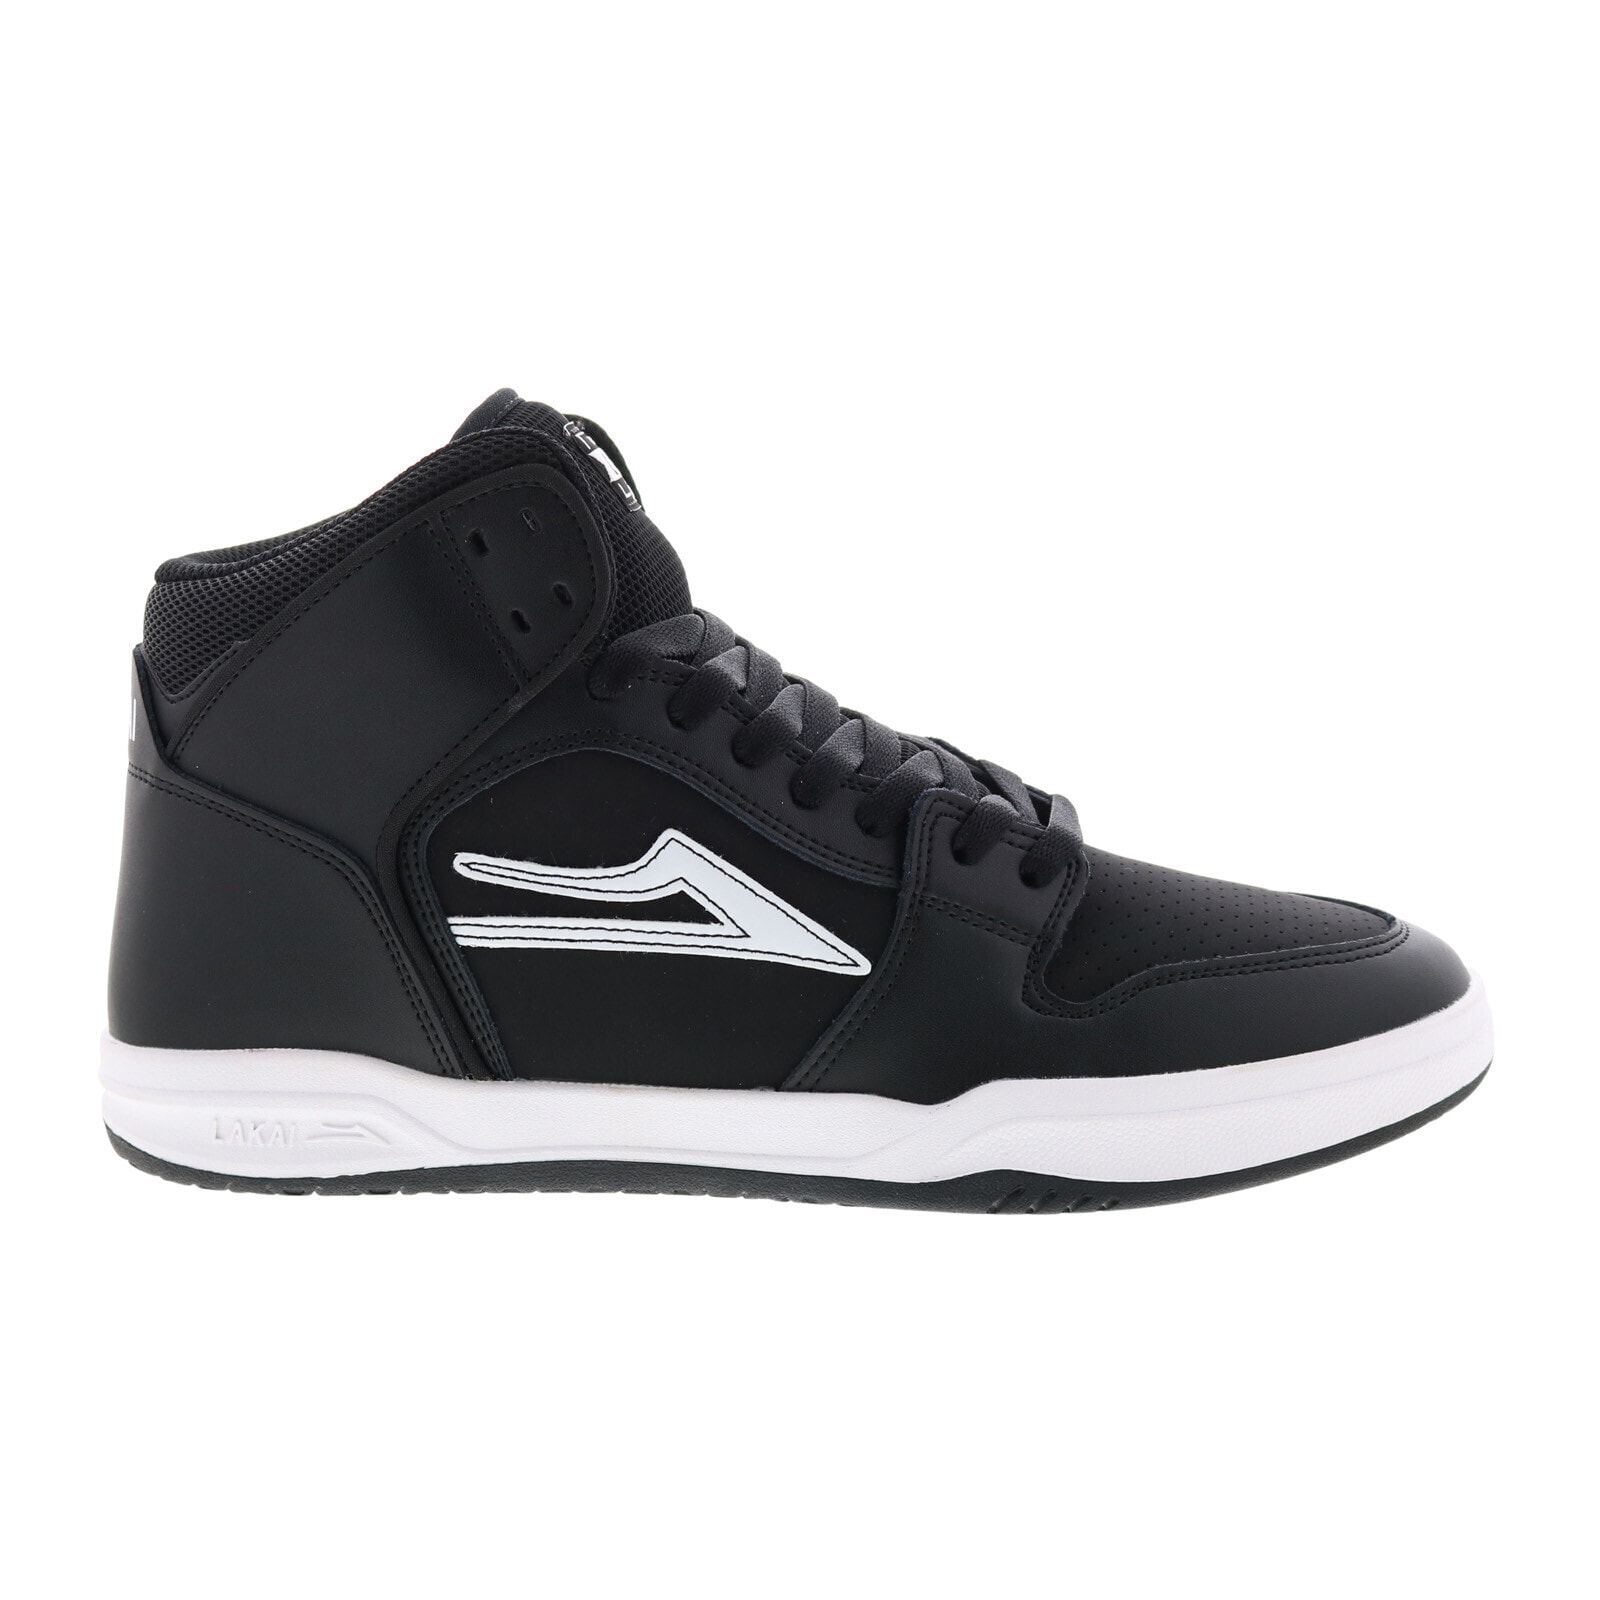 Lakai Telford MS4230208B00 Mens Black Leather Skate Inspired Sneakers Shoes